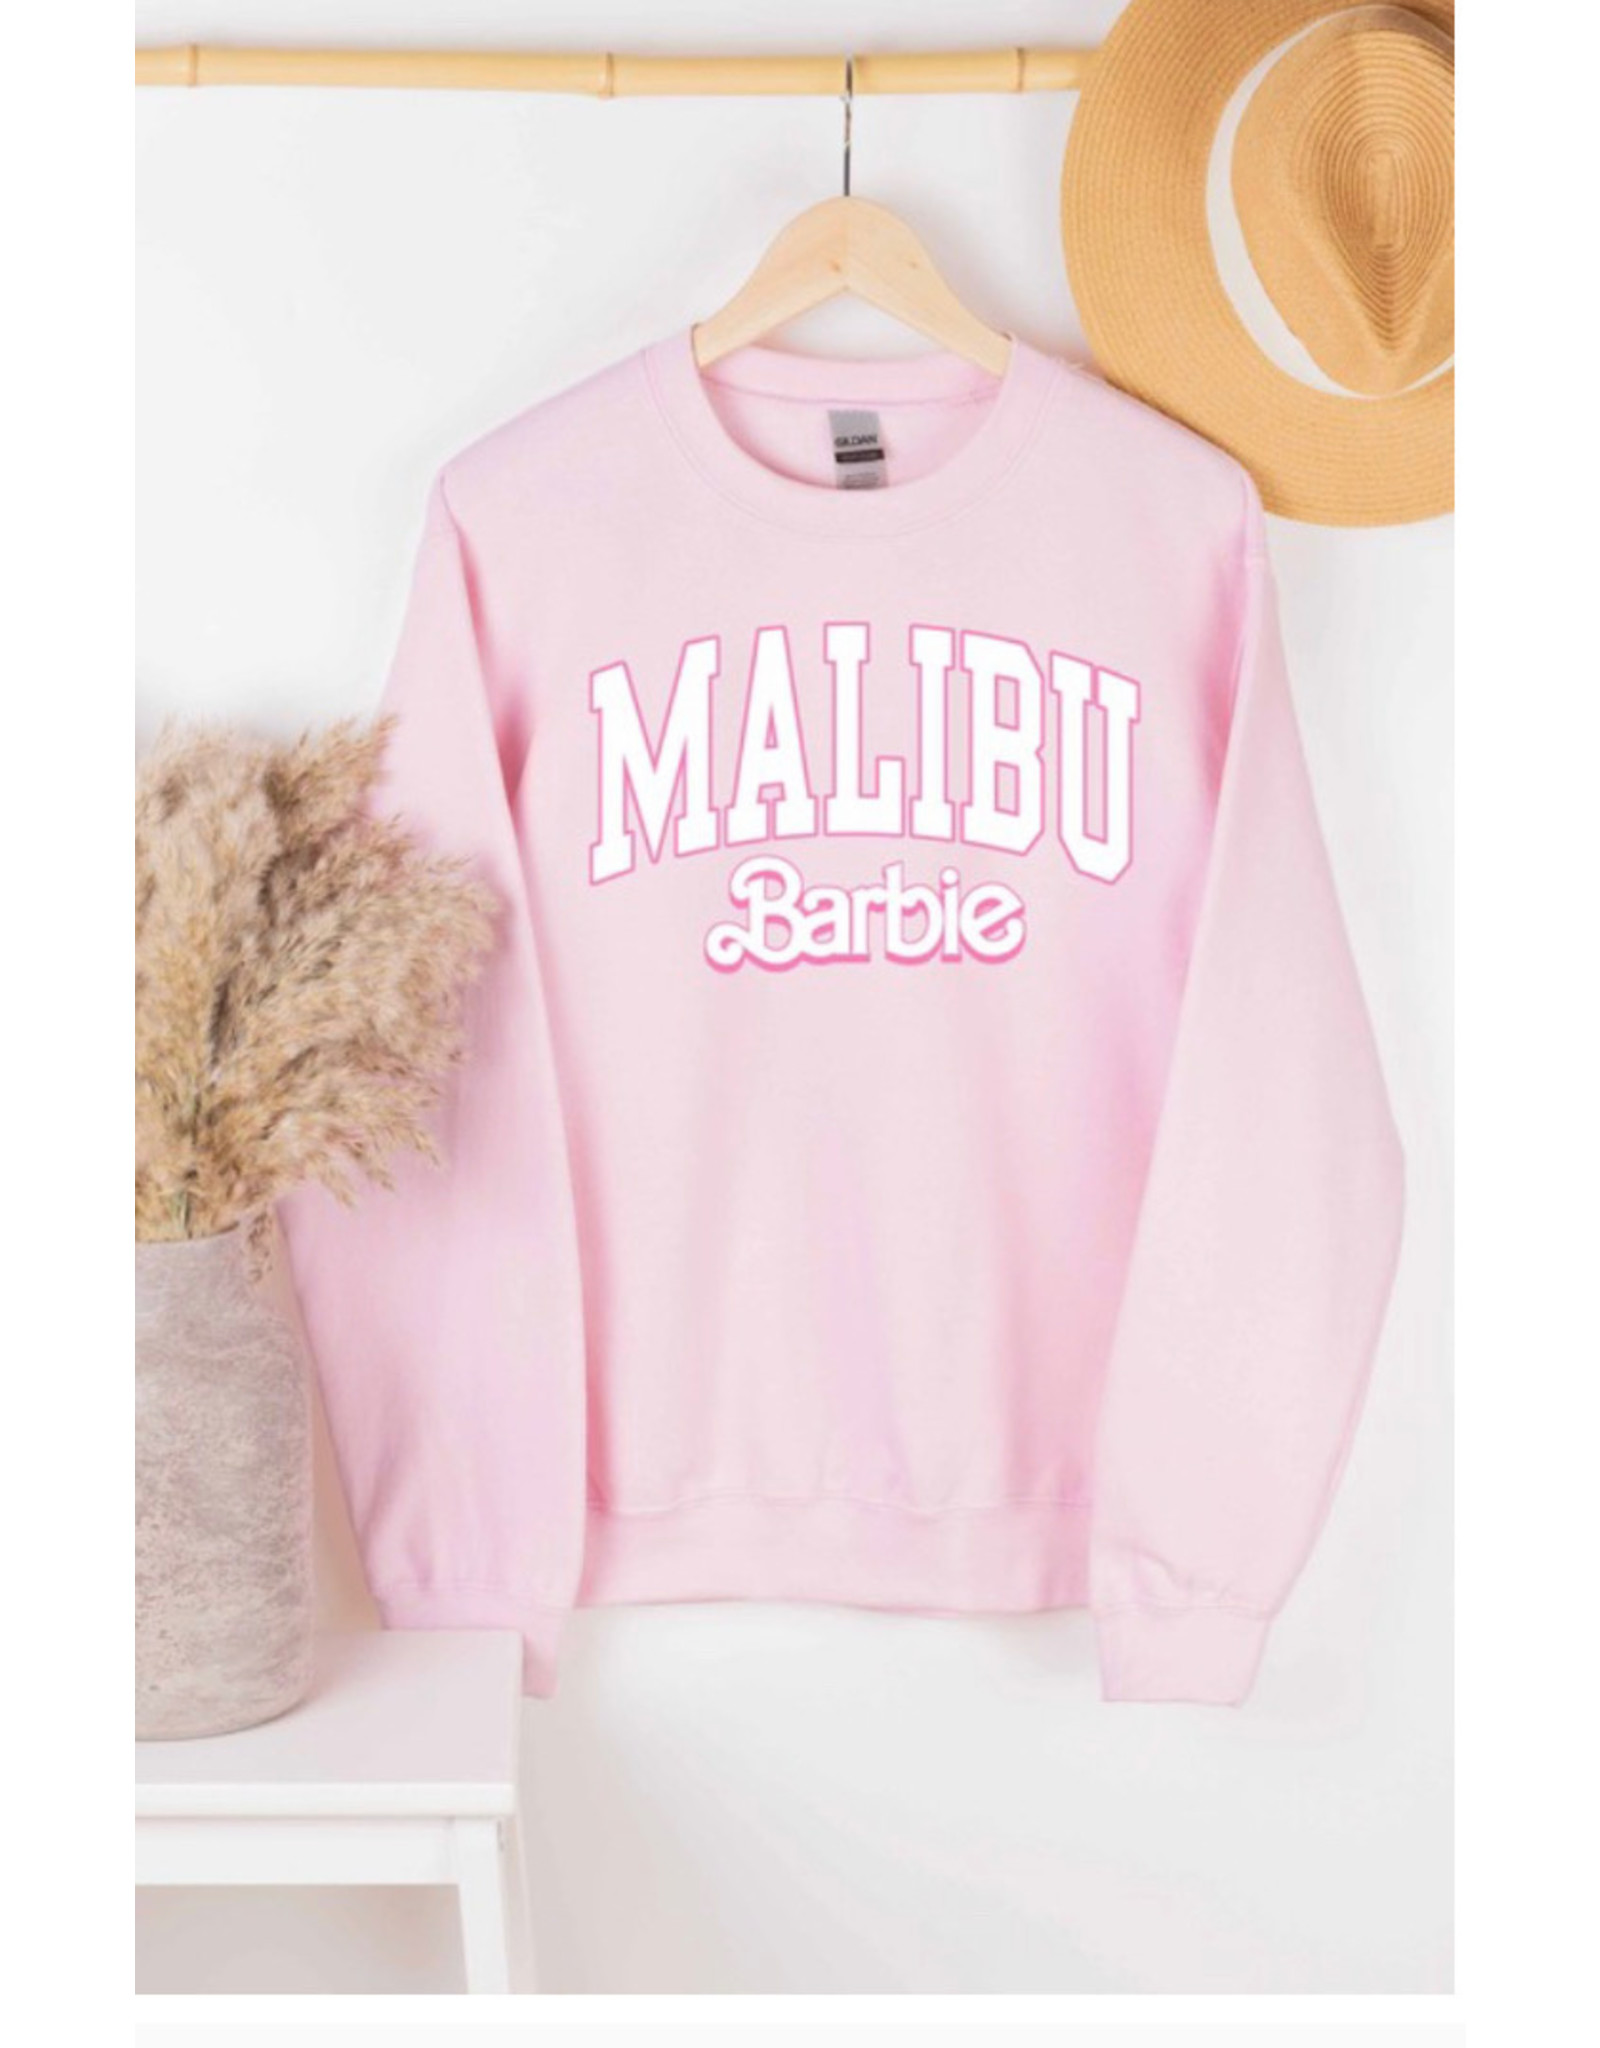 LATA Malibu Barbie Crewneck Sweatshirt